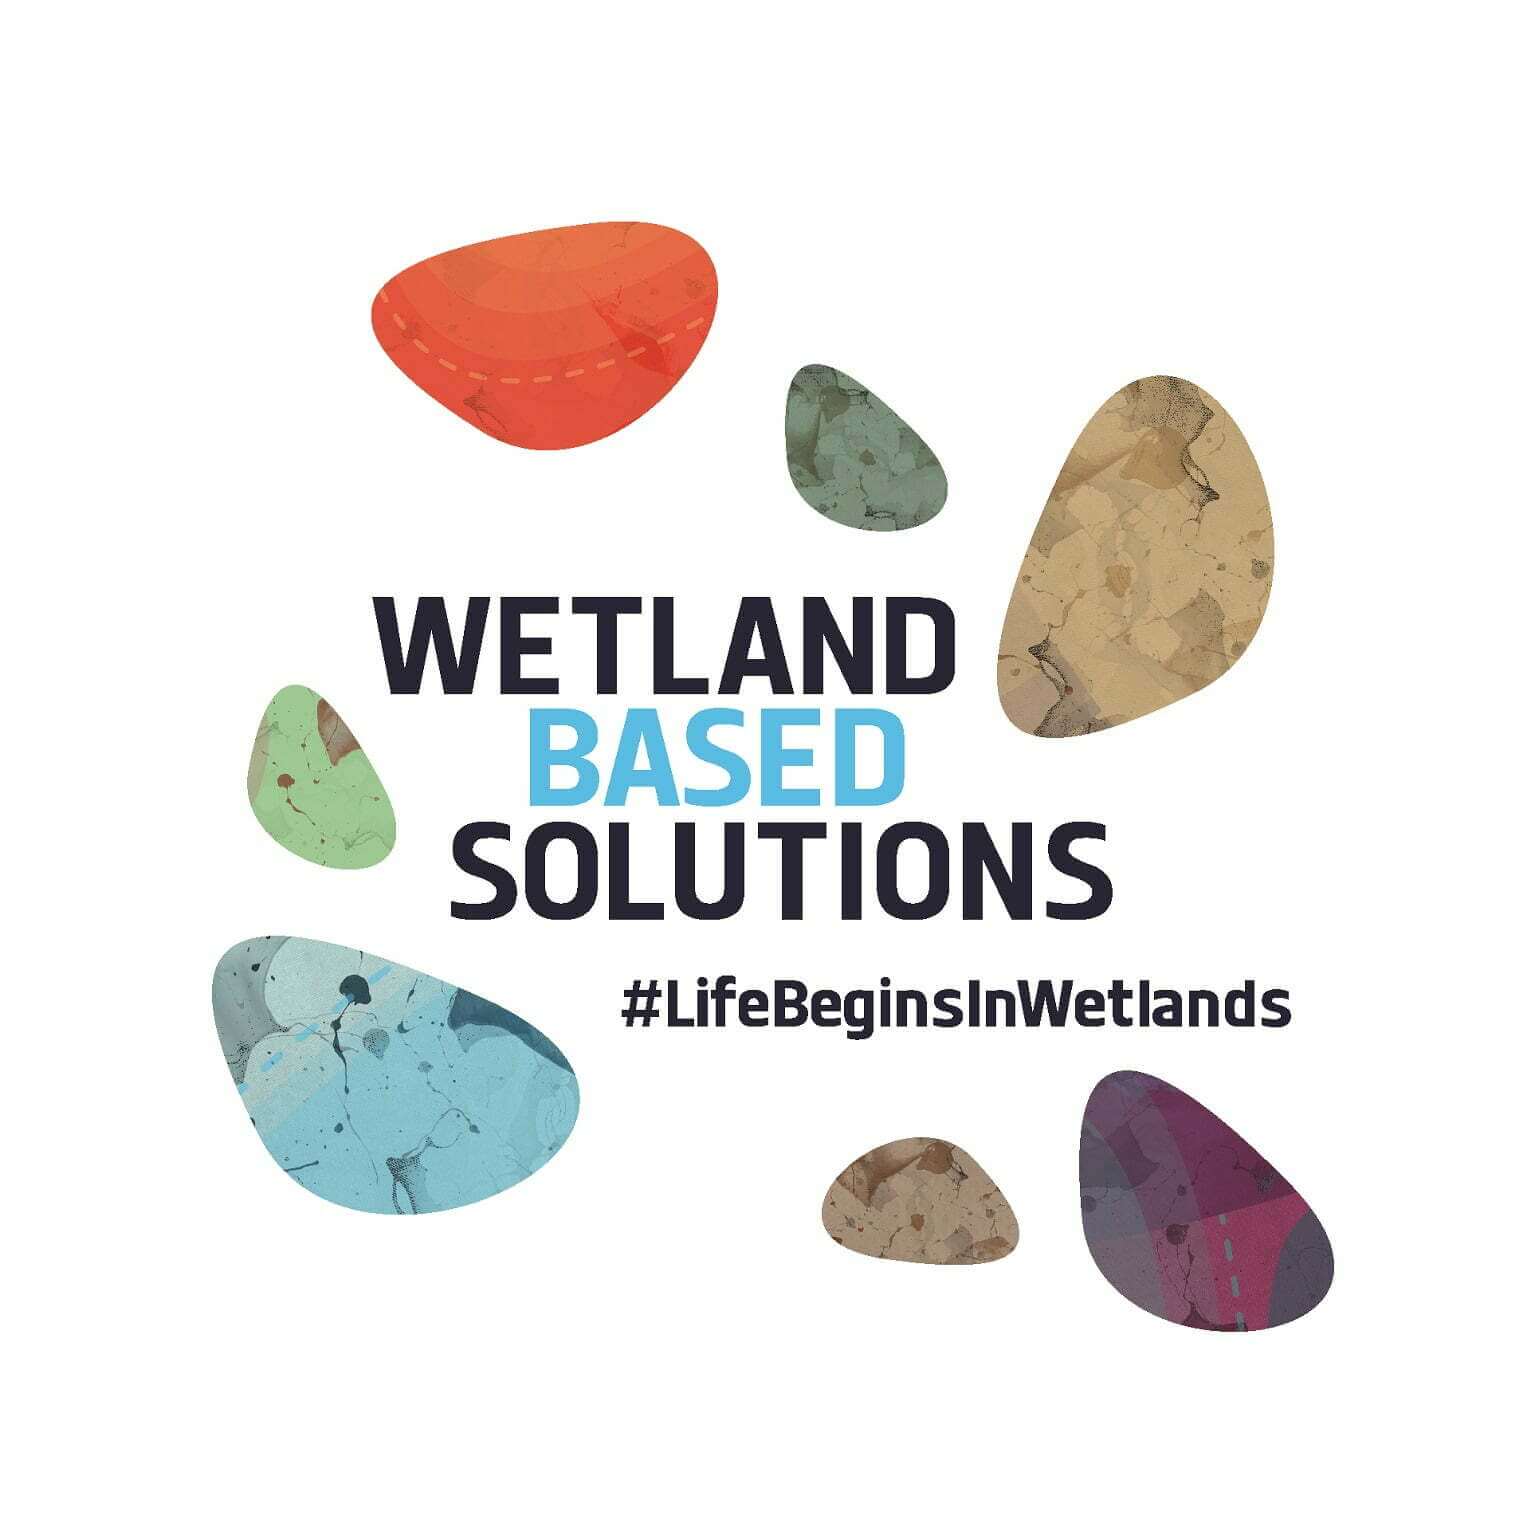 Wetland-Based Solutions